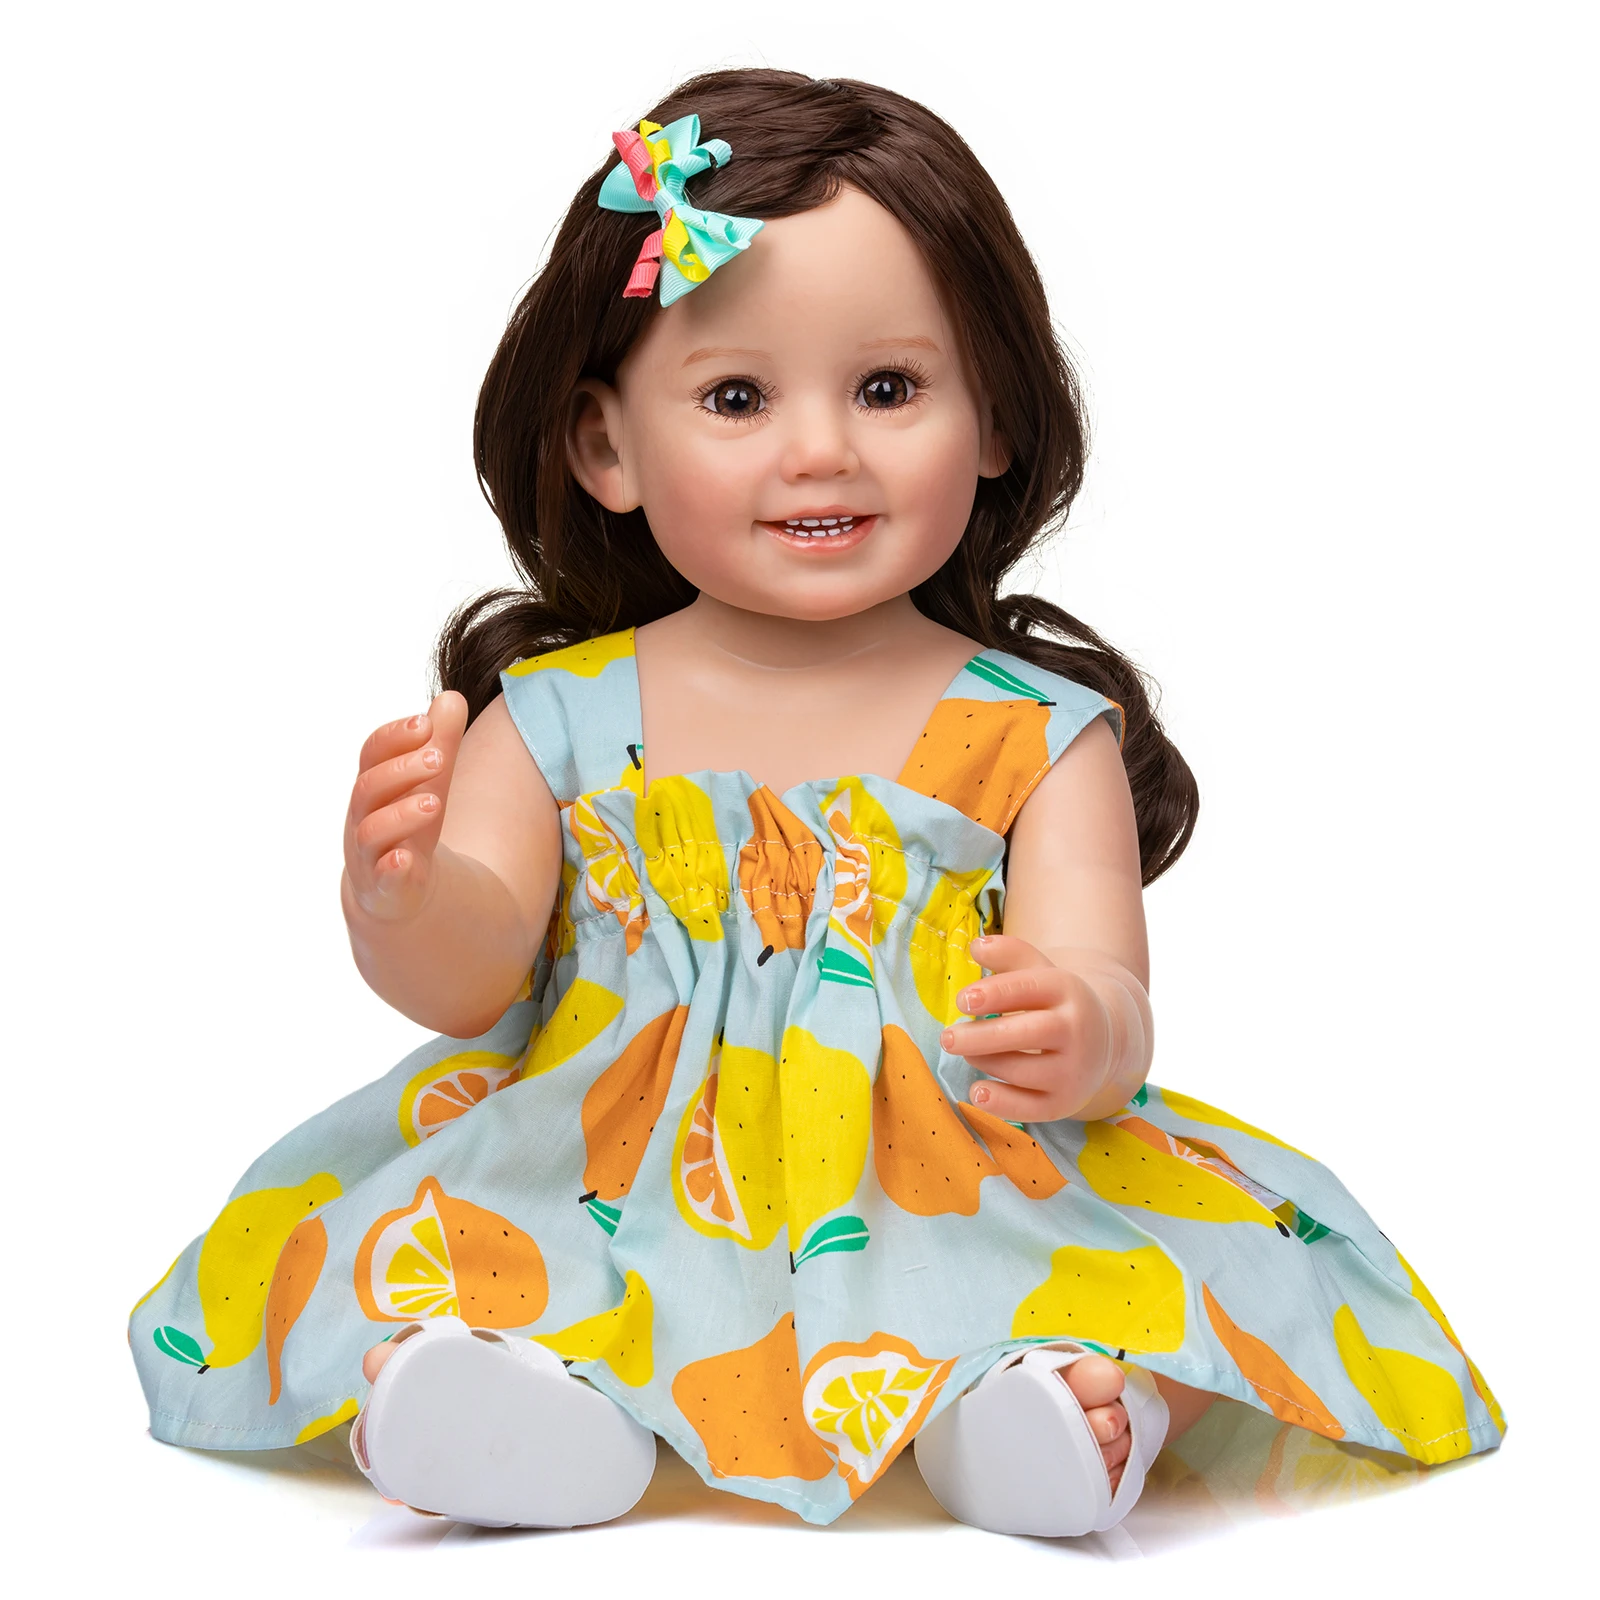 

55cm realista bebe reborn doll lifelike girl reborn babies silicone dolls toys for children xmas gift bonecas for kids